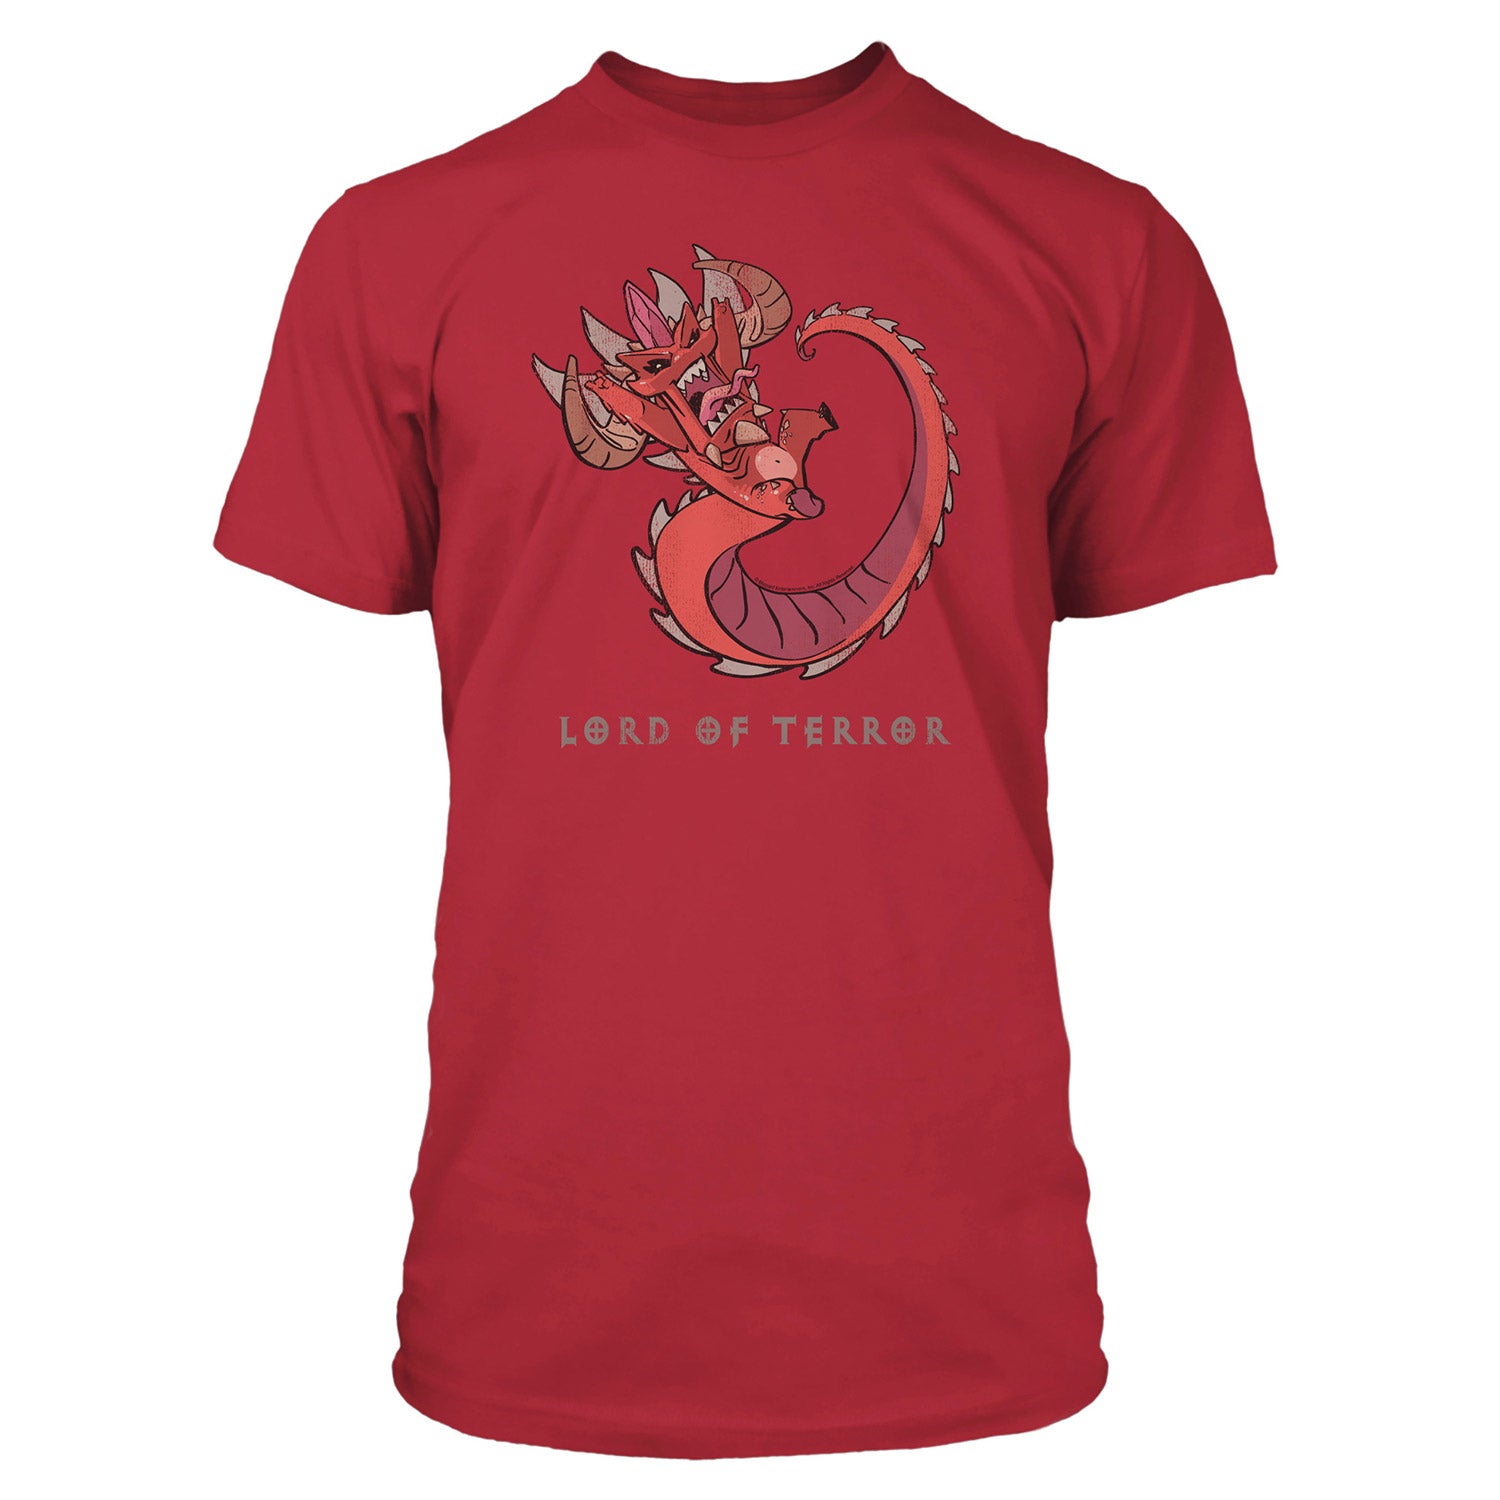 Diablo III J!NX Cartoon Lord of Terror Red T-Shirt - Front View